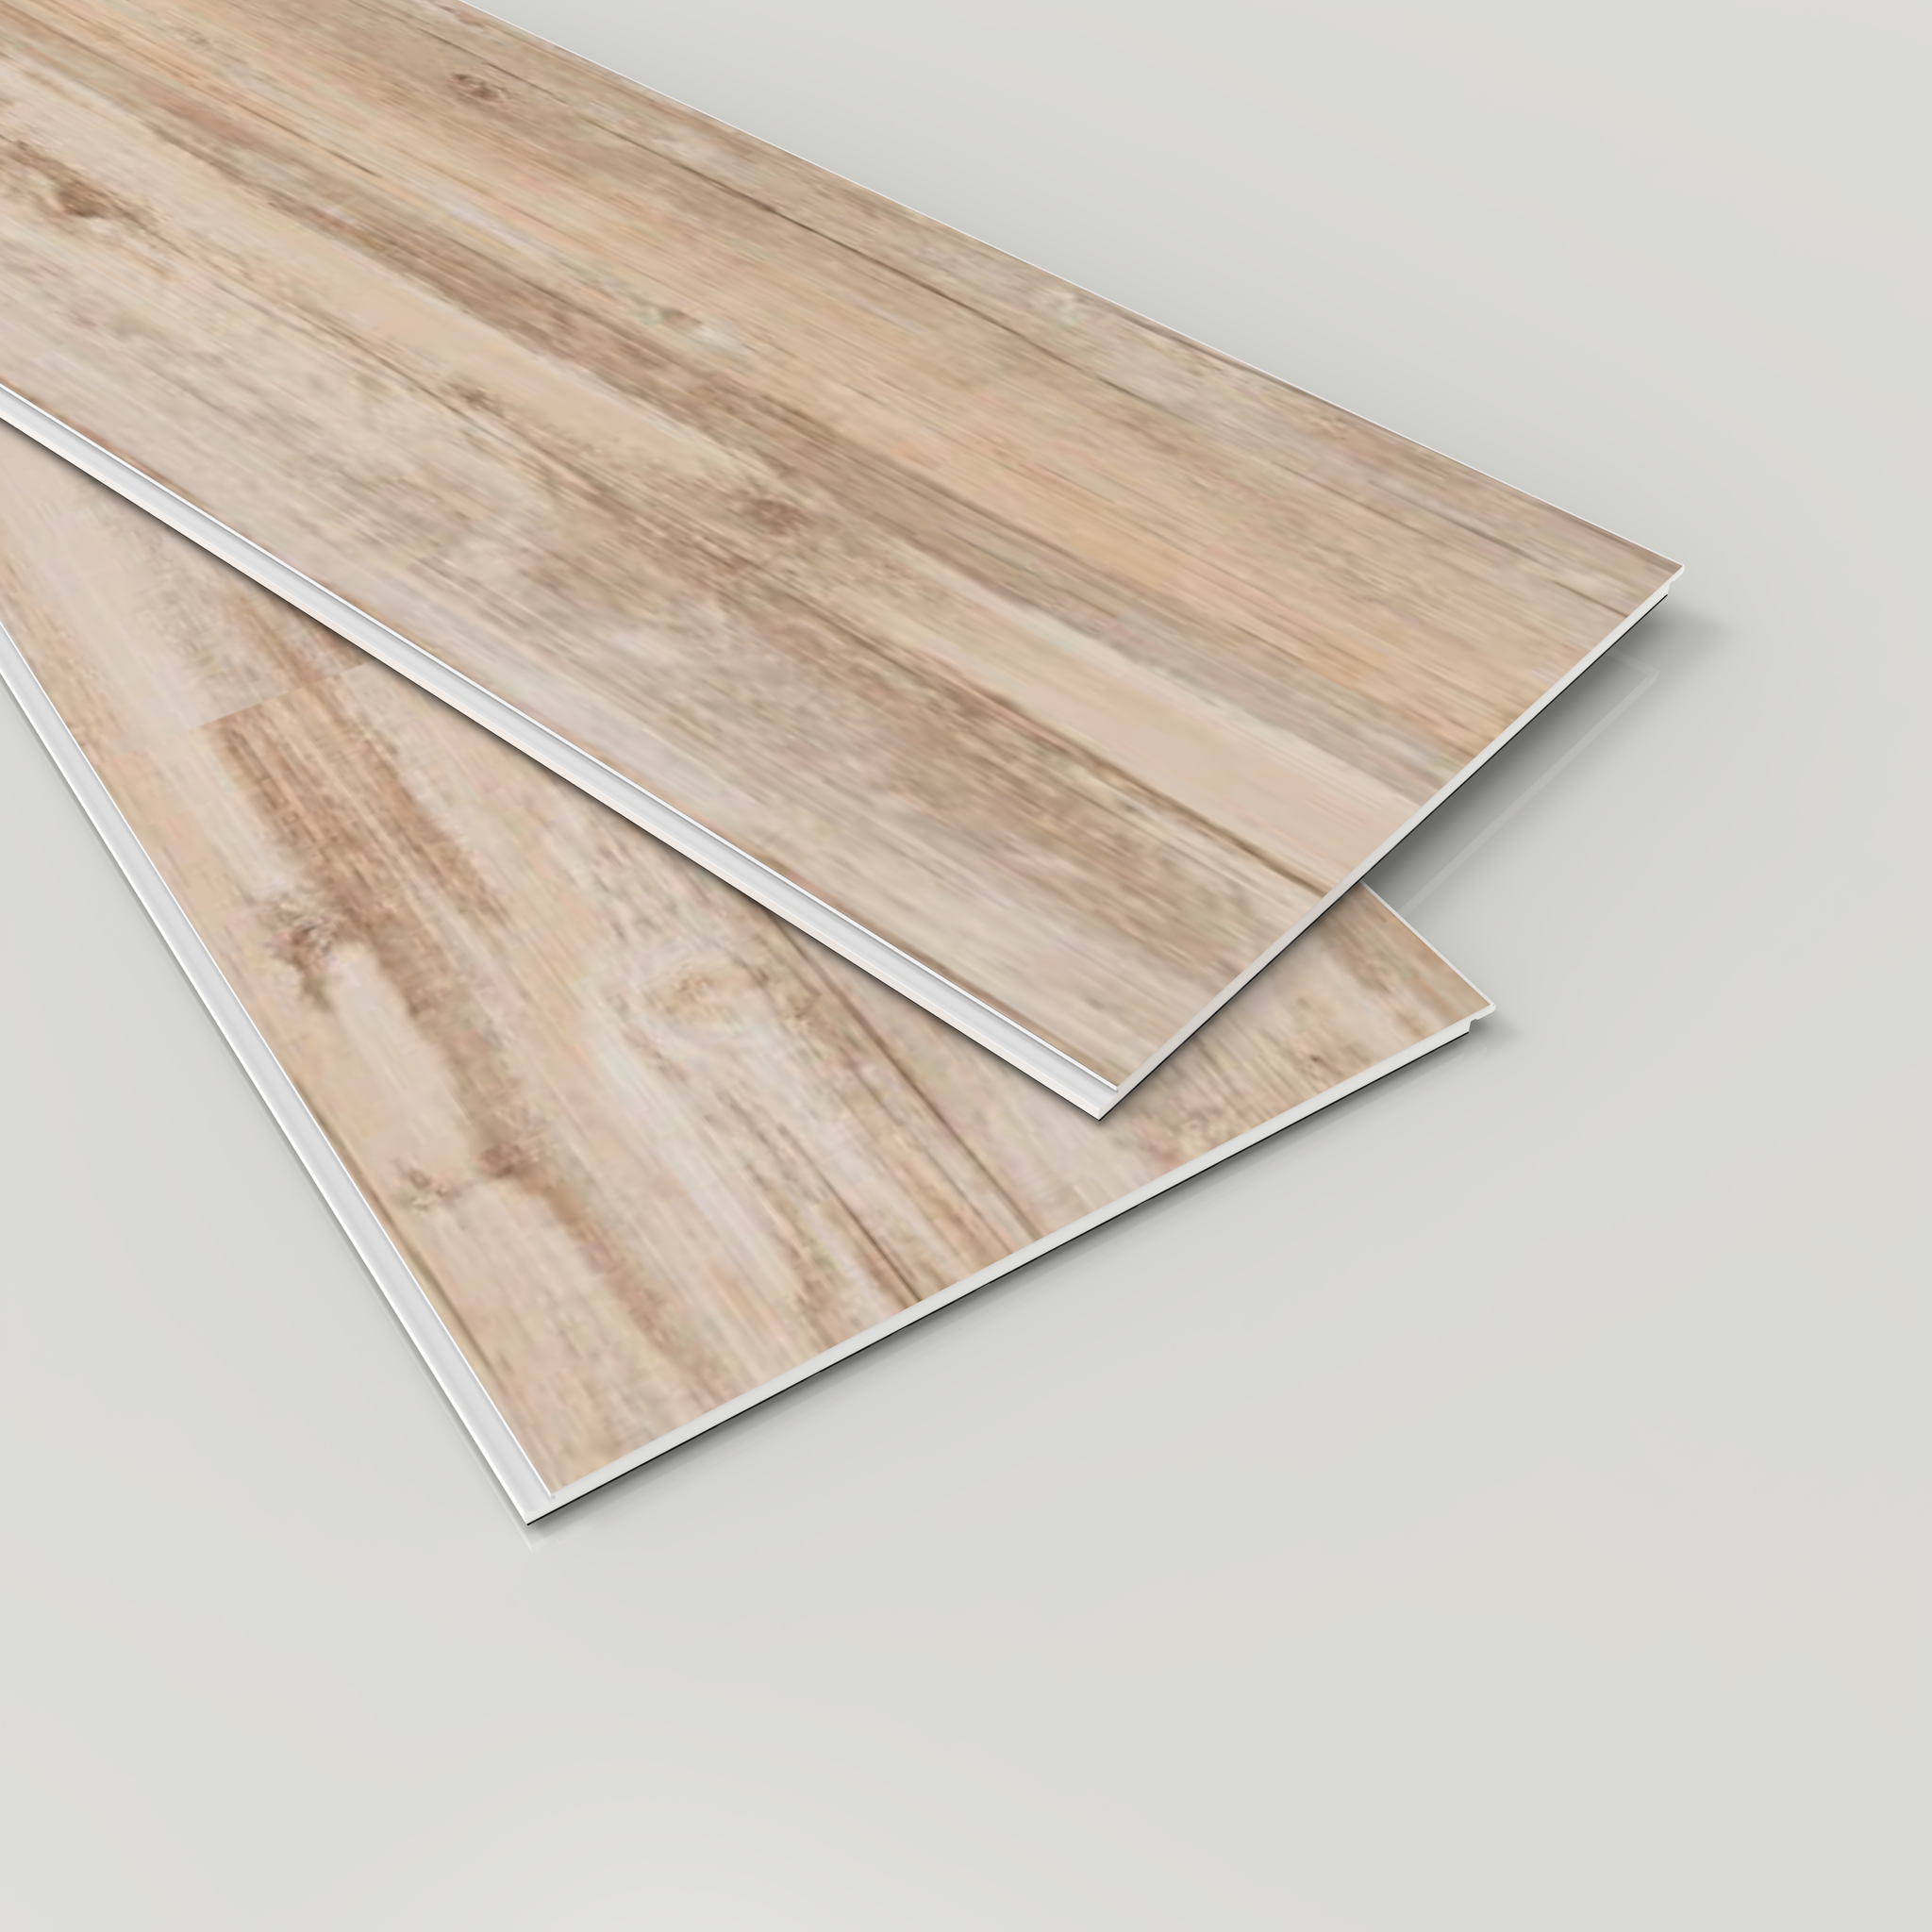 Shaw Matrix Plank Commack Pine Click Lock Vinyl Flooring, 6" x 48" x 3.2mm Thickness (27.58SQ FT/ CTN)